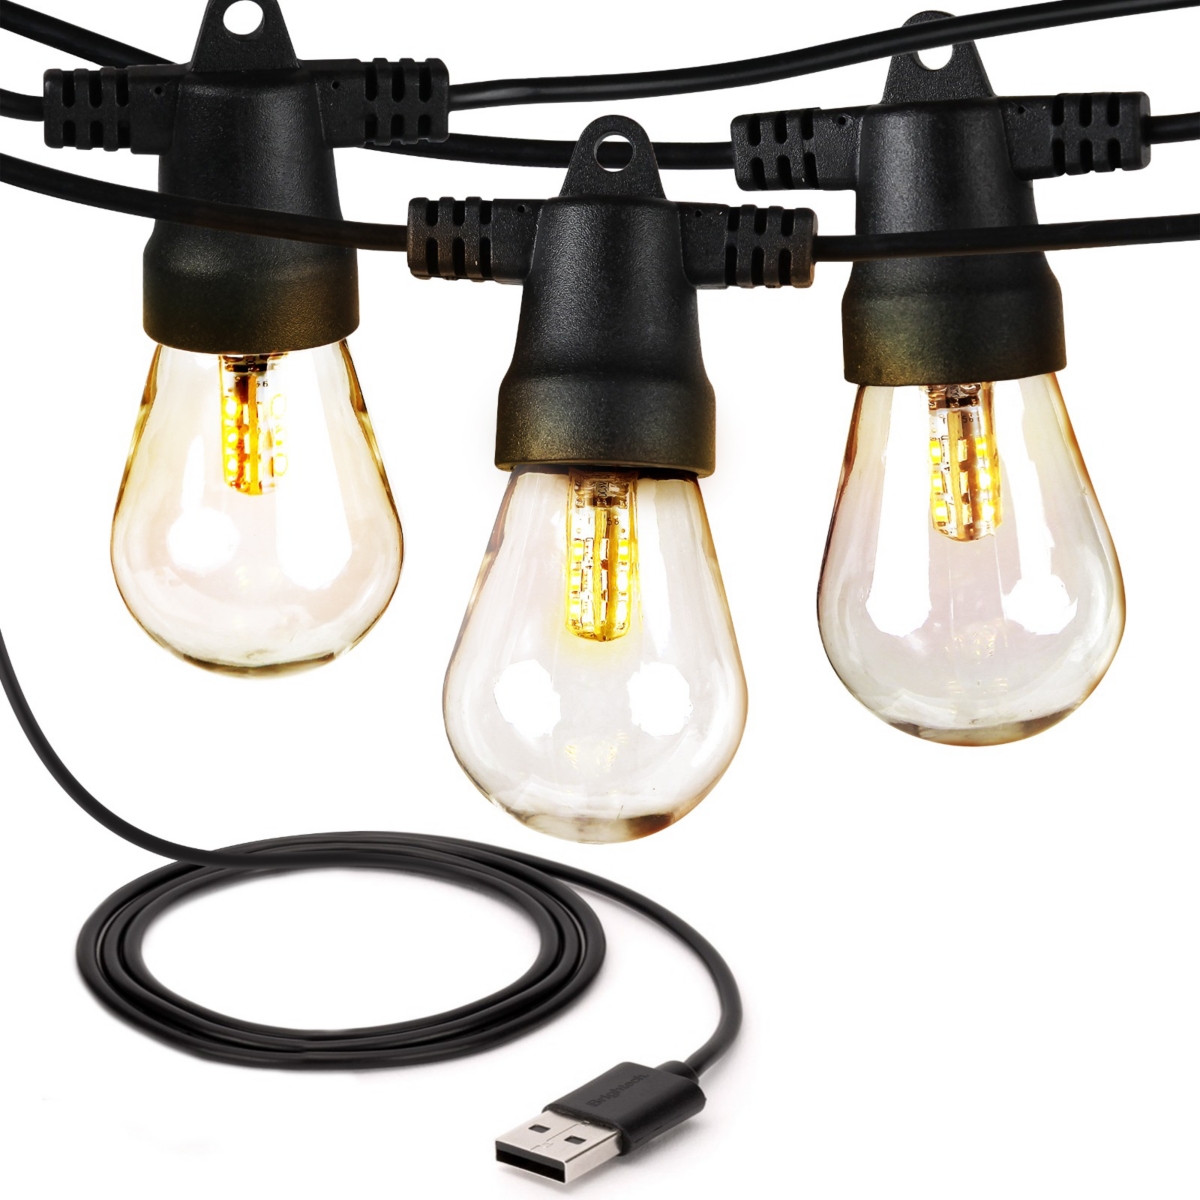 Weatherproof Usb Powered Led Holiday String Lights - 10 Shaterproof Plastic Bulbs, 1W, 24.5 Ft, 3000K - Classic black